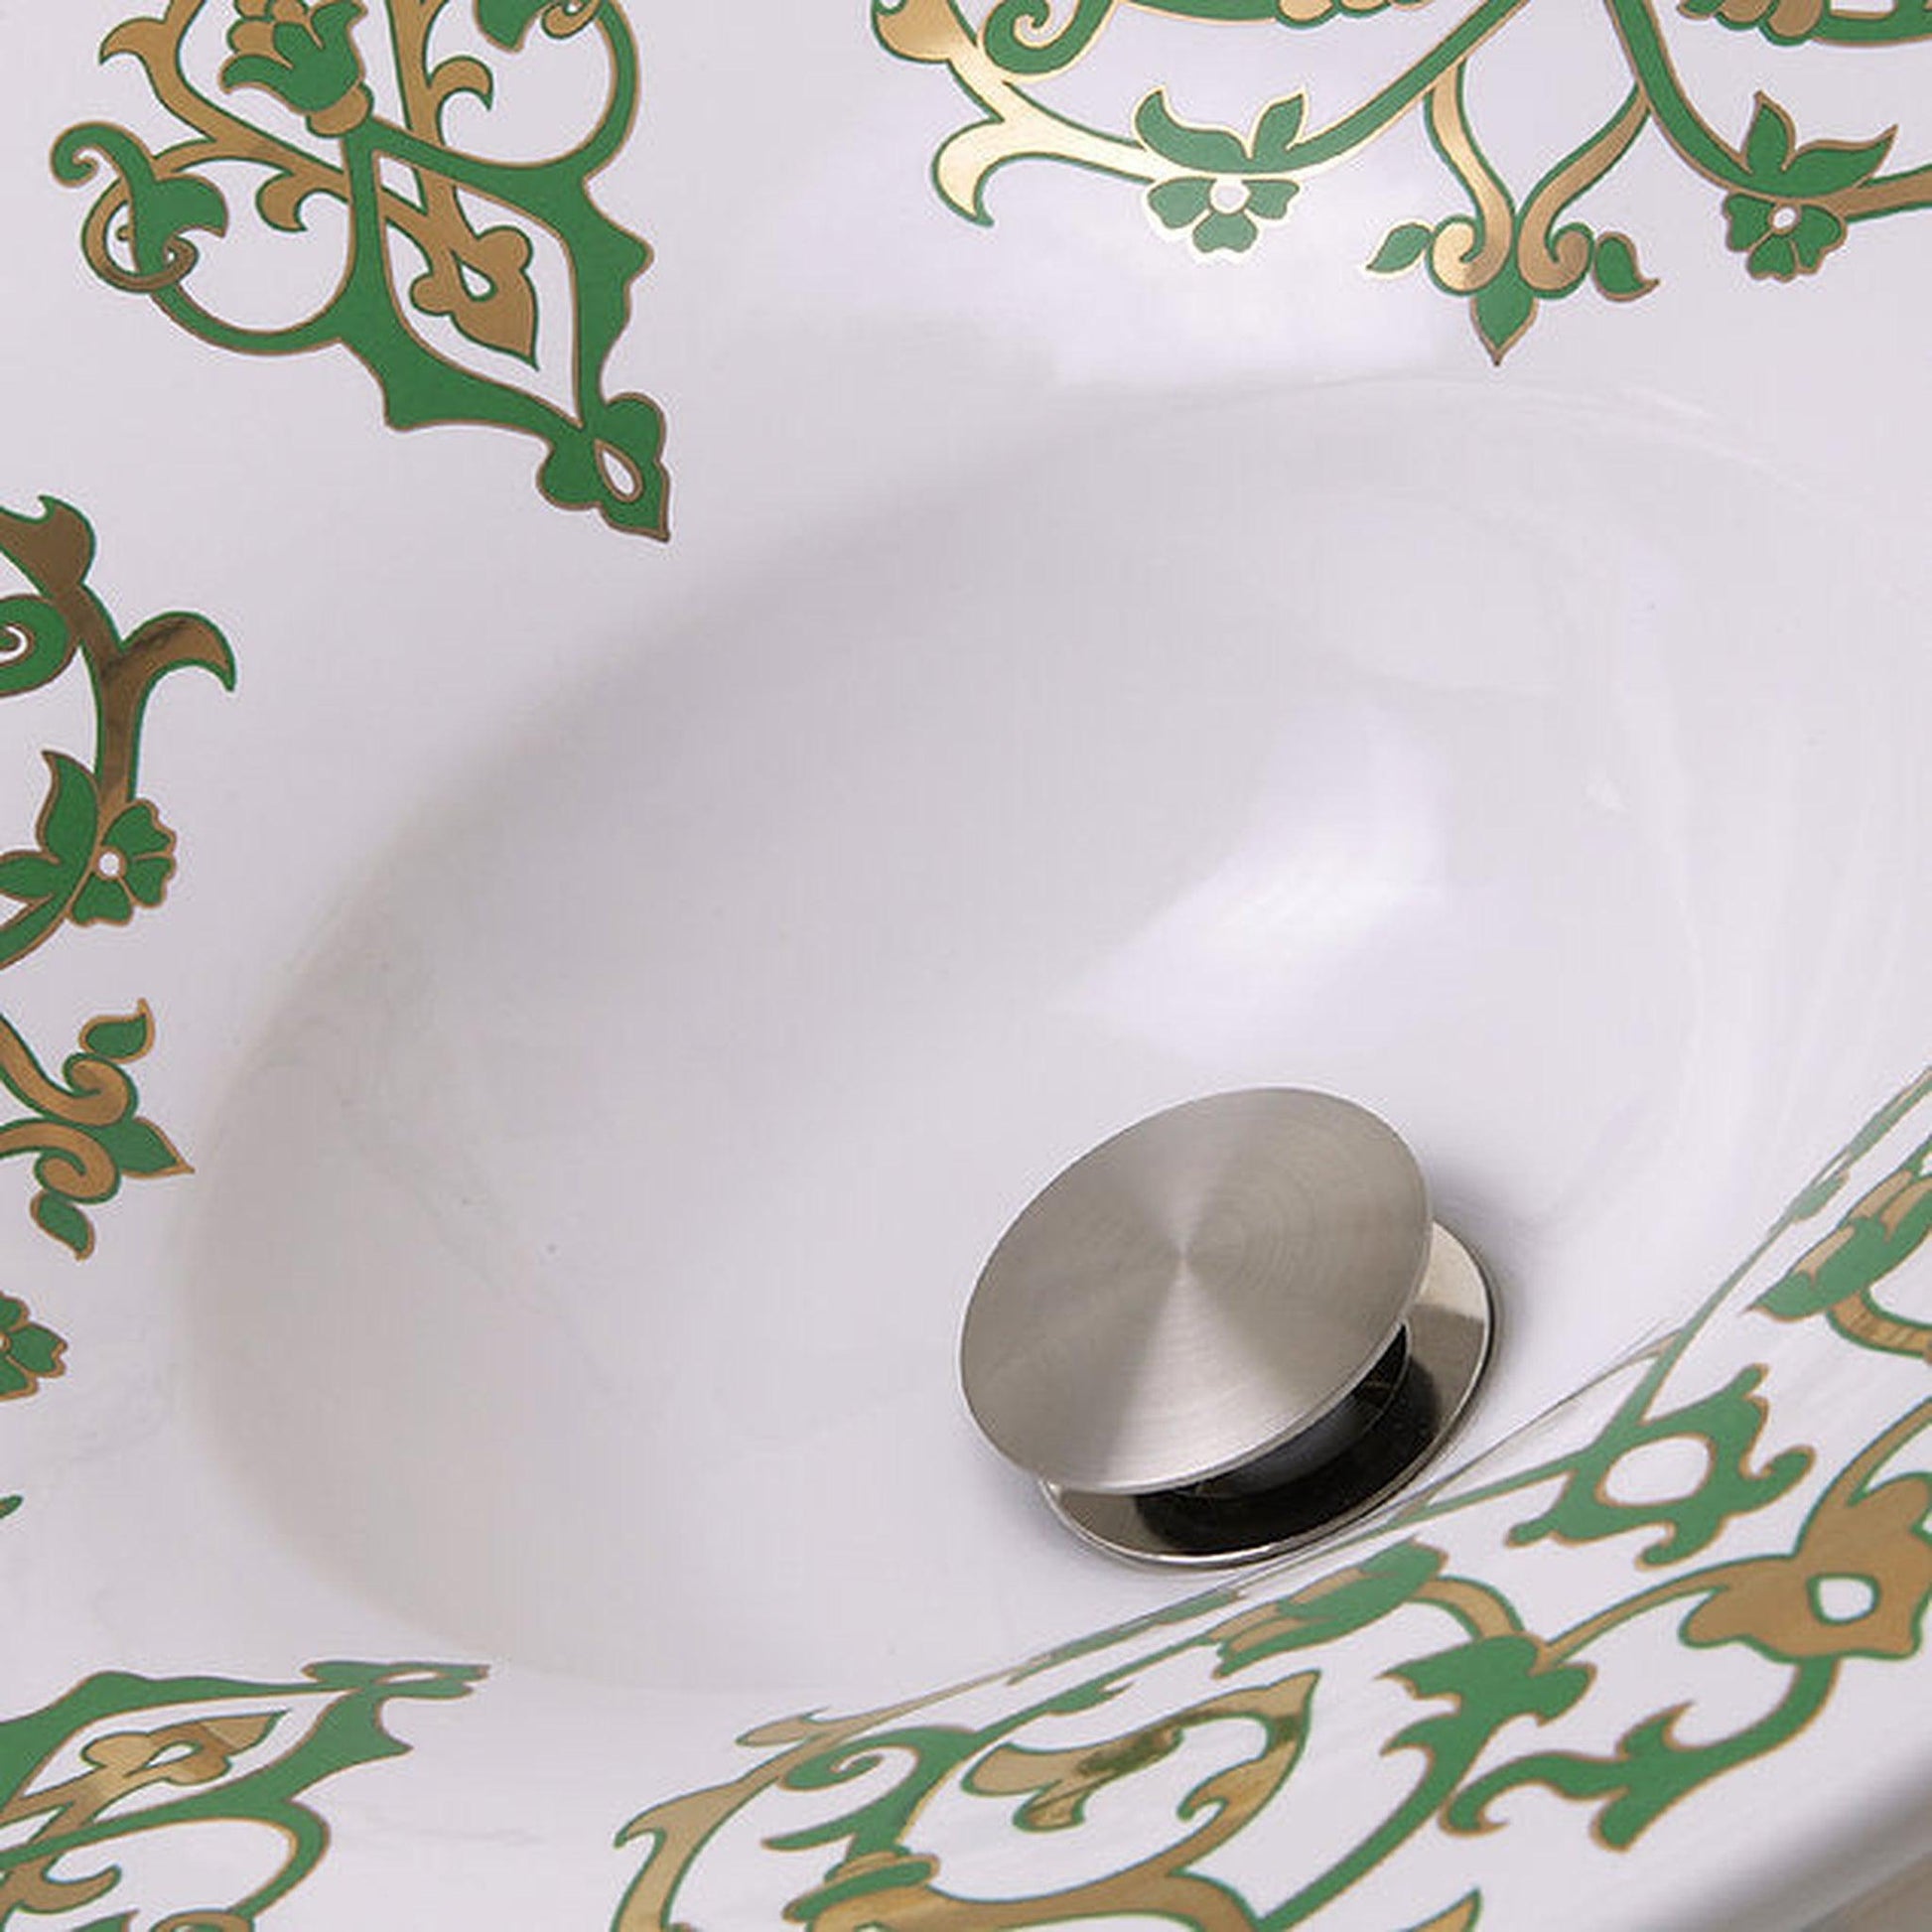 Nantucket Sinks Regatta 18" Lugano Italian Fireclay Round Glazed Hand Decorated 24K Gold Leaf Accent Semi Recessed Vanity Sink